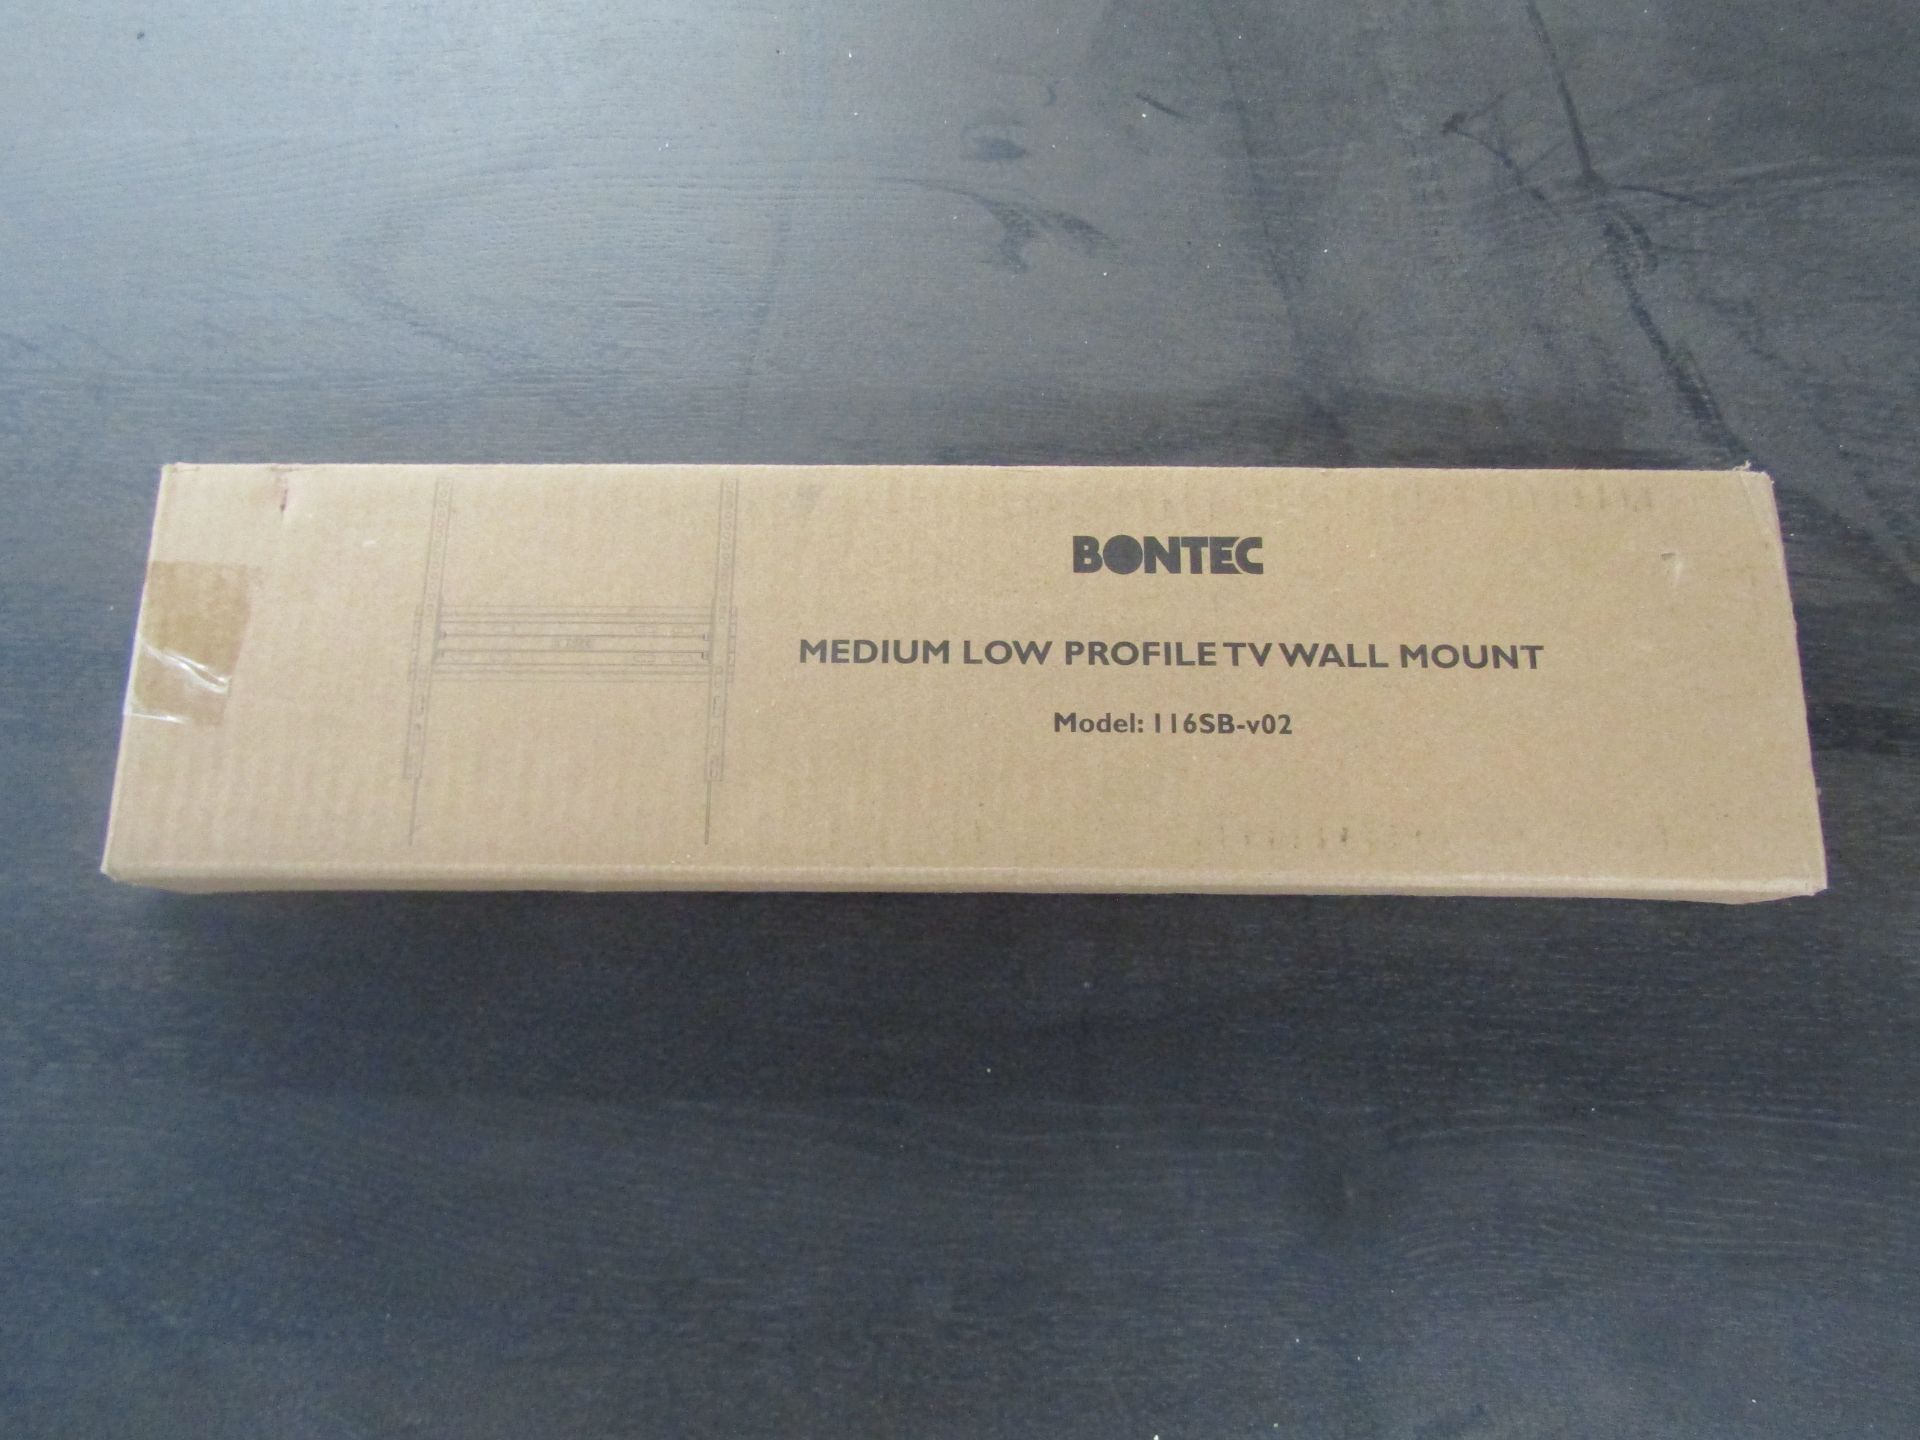 BONTEC Ultra Slim TV Wall Bracket Mount for 23-60 inchs LCD LED TVs, Low Profile Tilt TV Wall